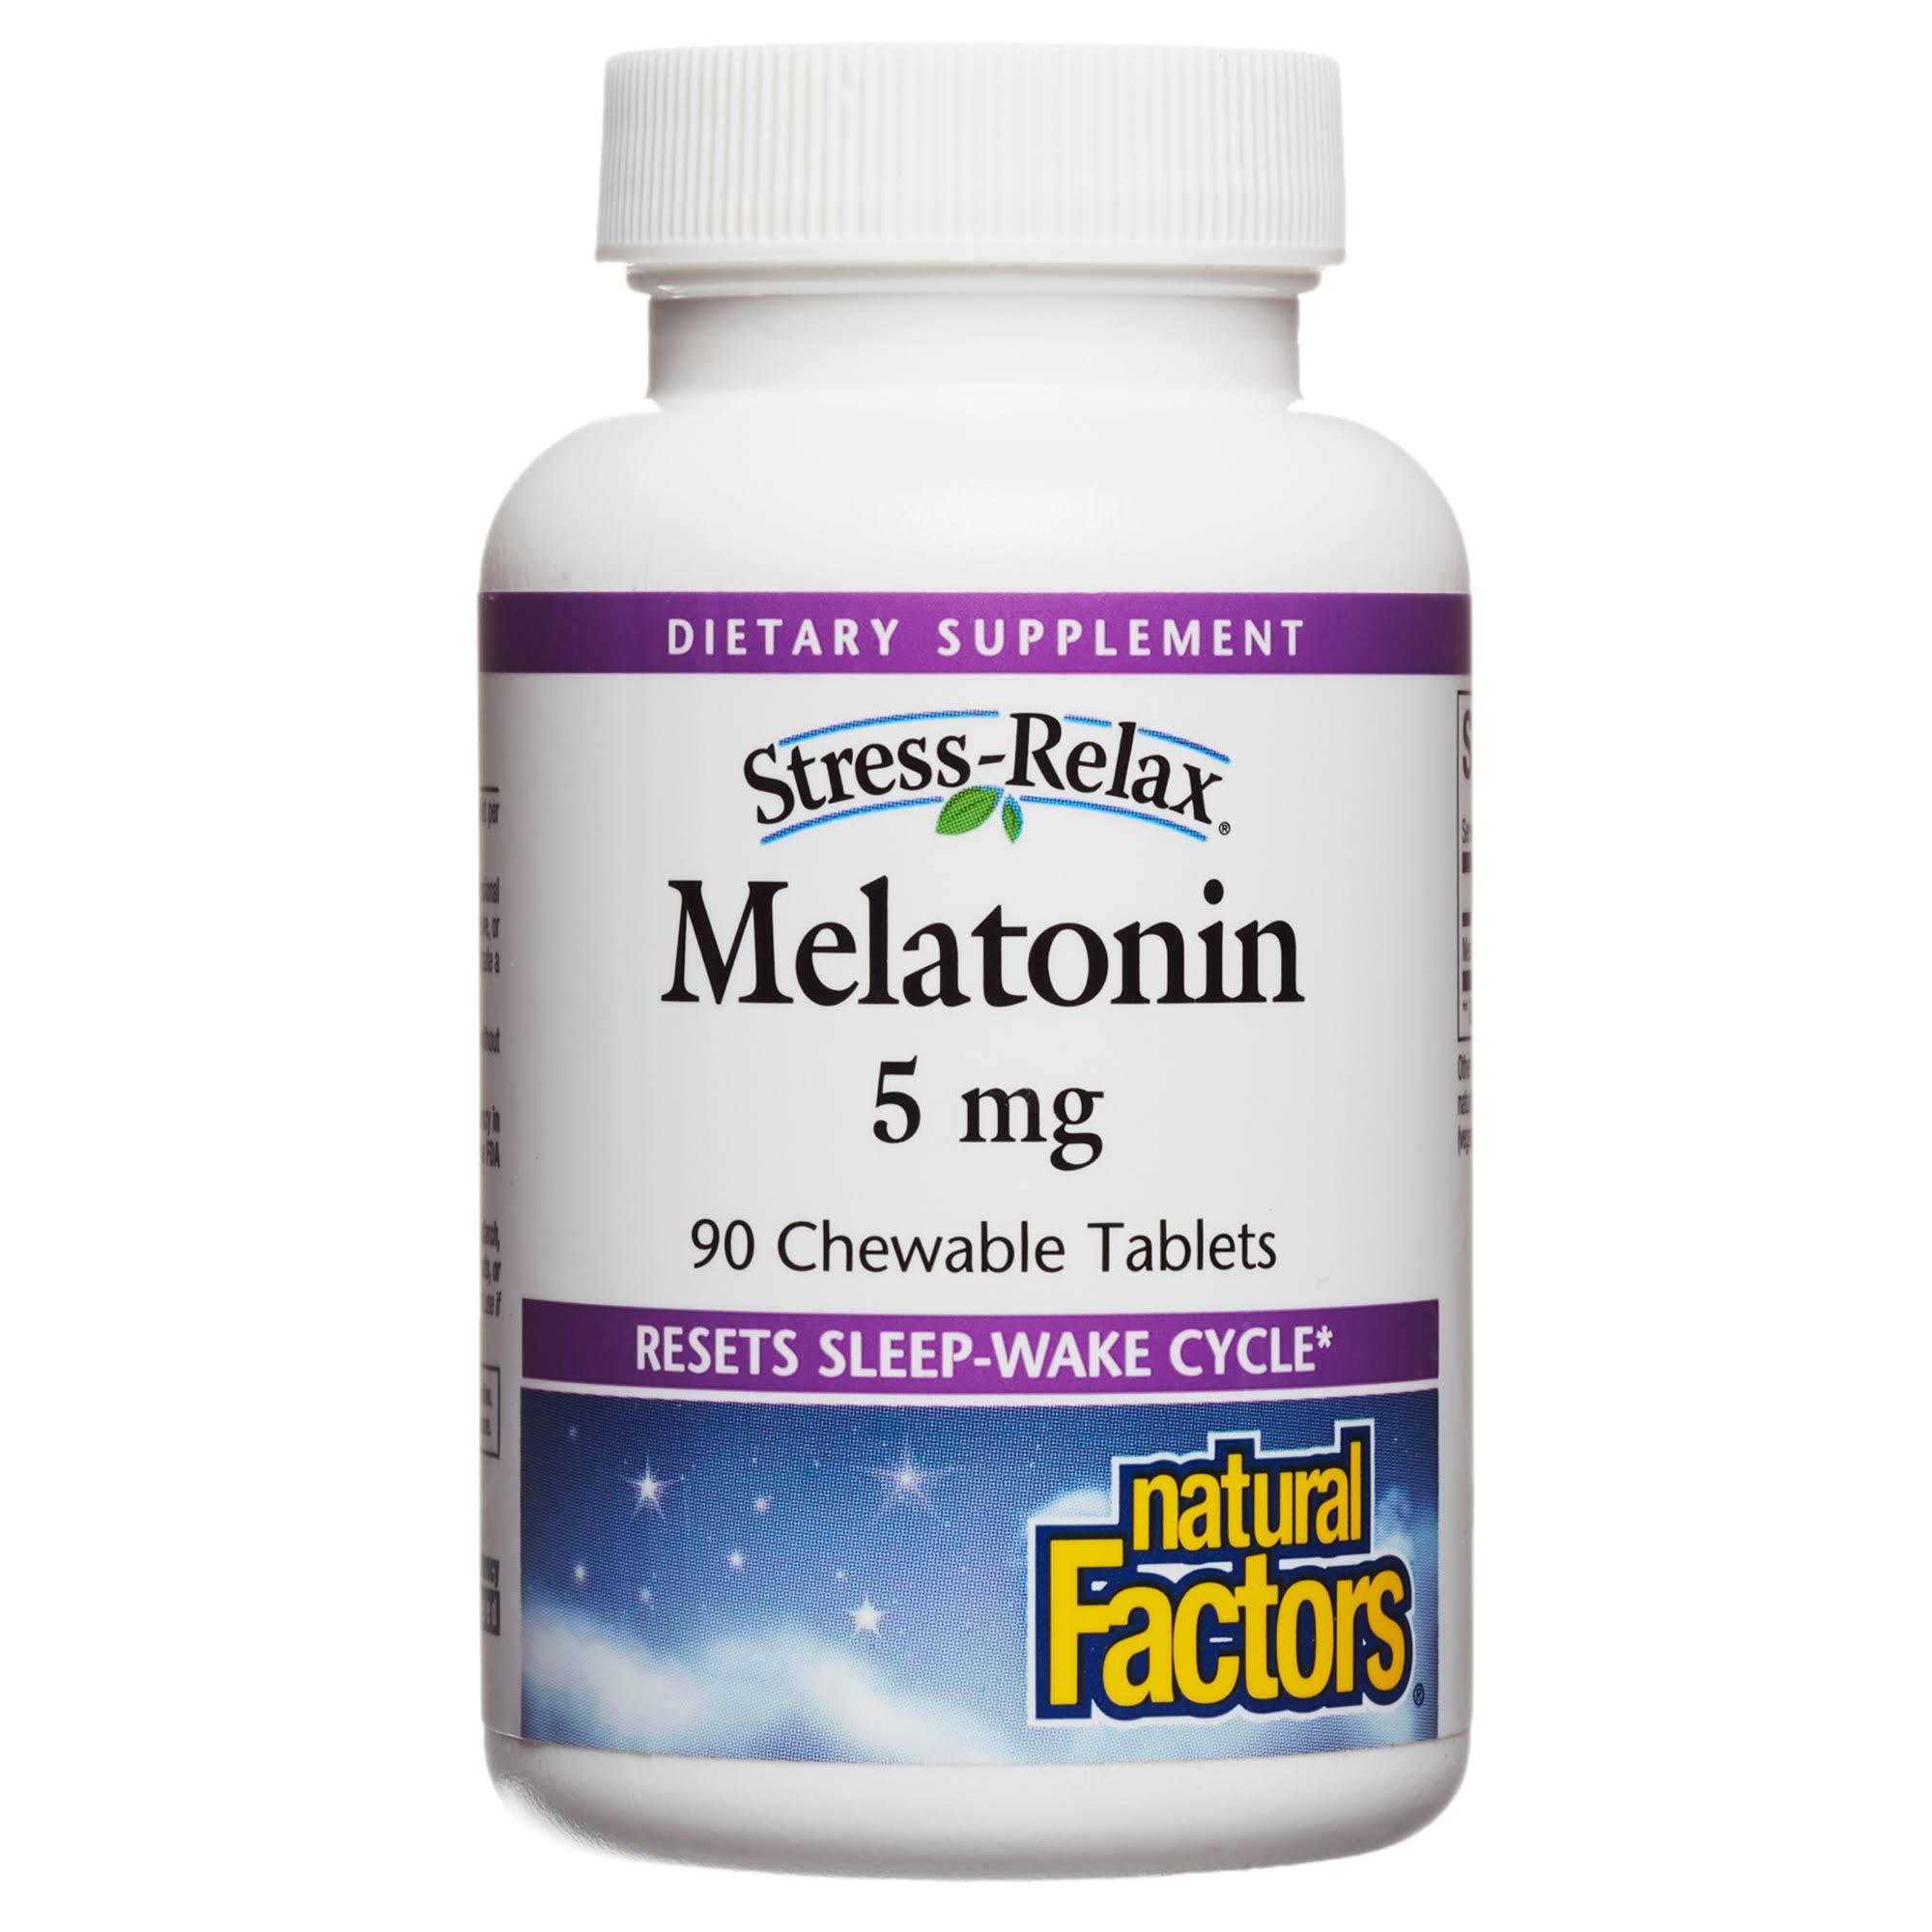 Natural Factors Stress-Relax Melatonin Supplement - 90 Chewable Tablet